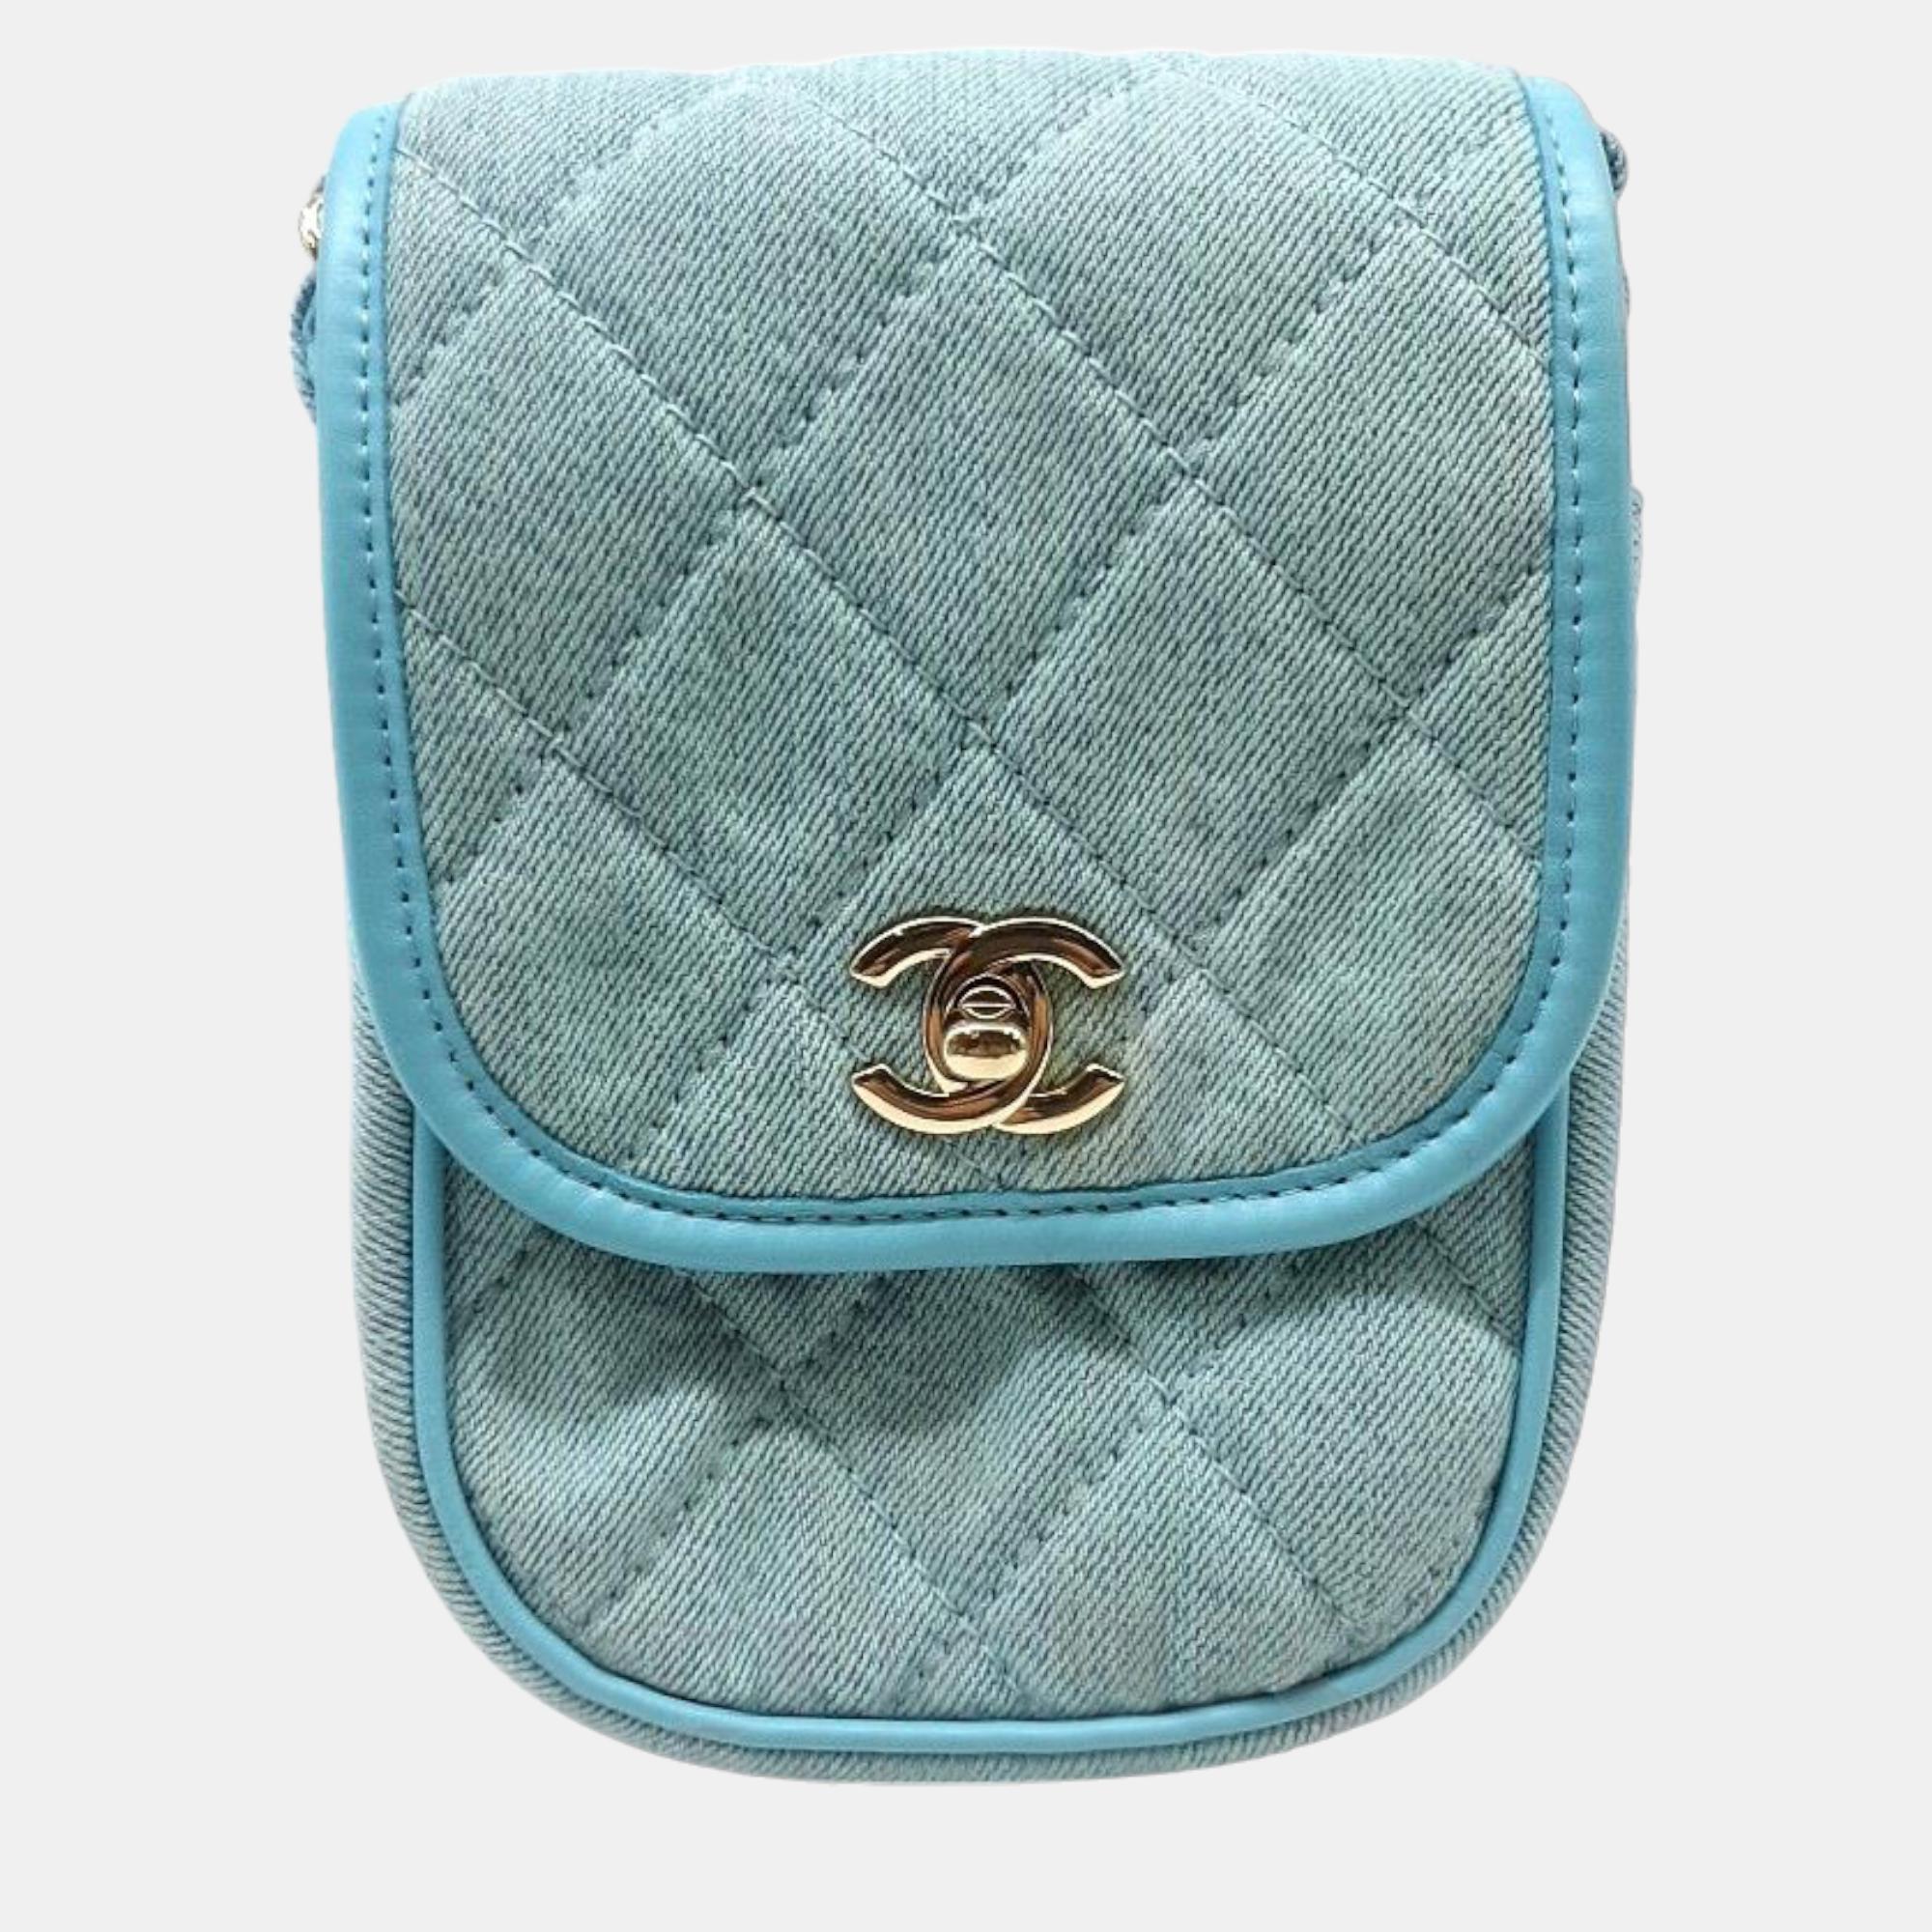 Chanel blue fabric cc mini messenger bag